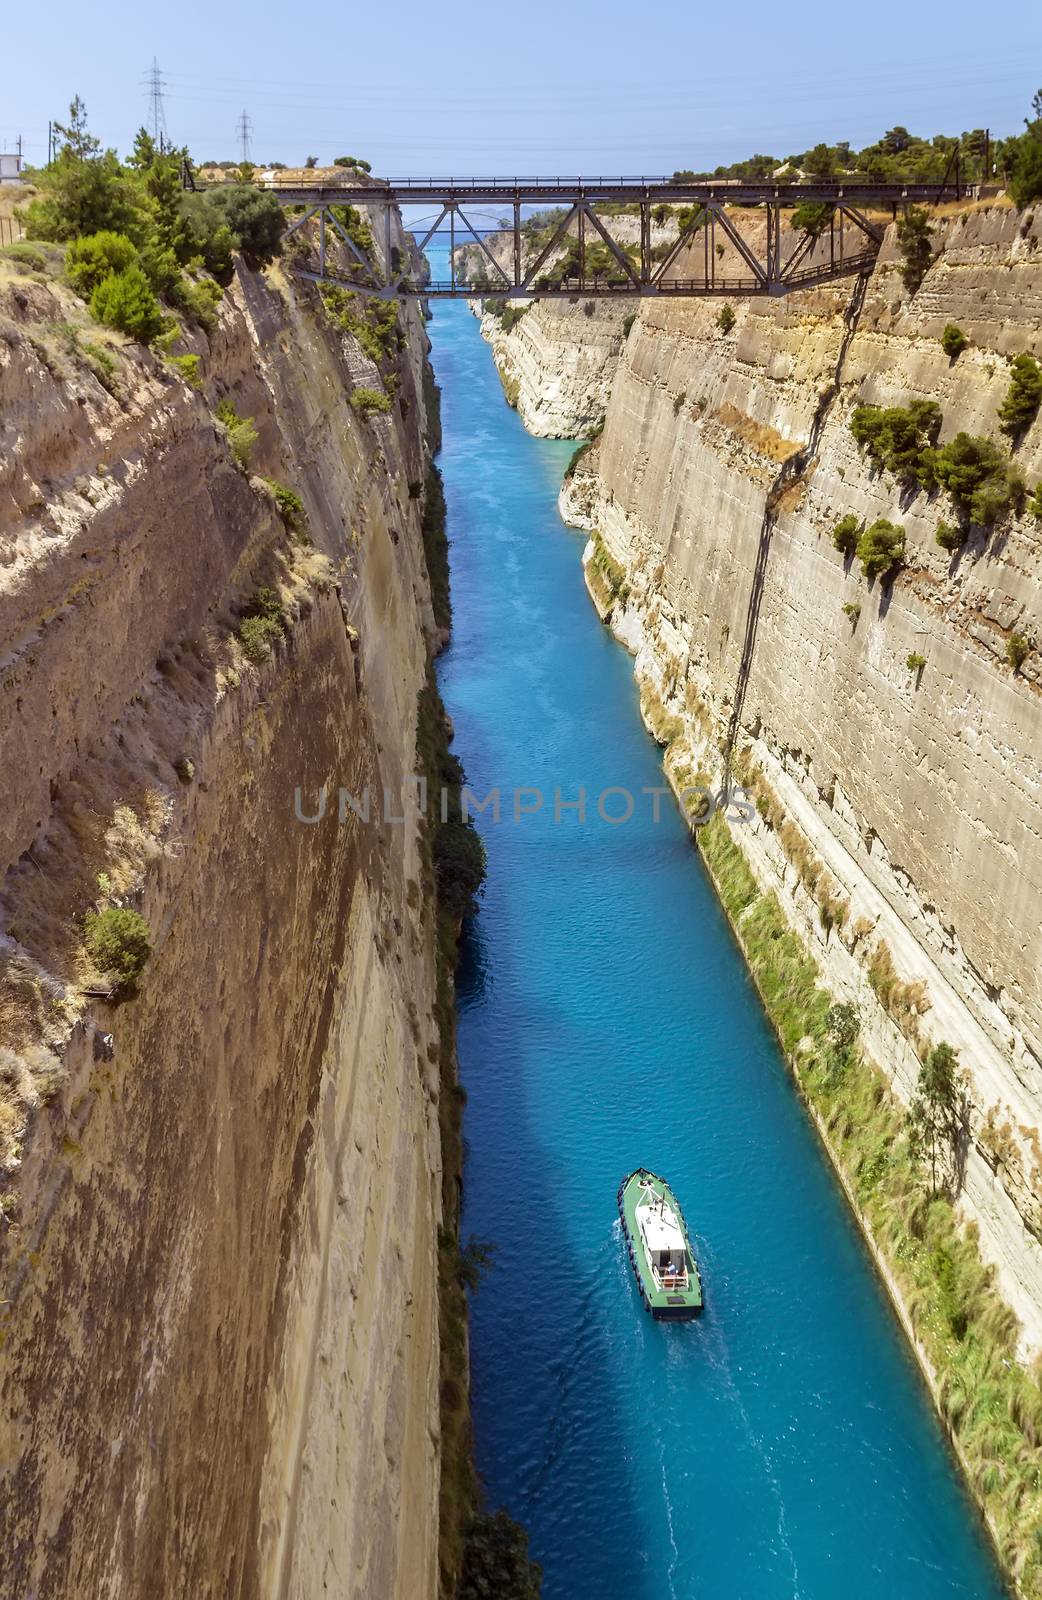 Corinth Canal, Greece by borisb17